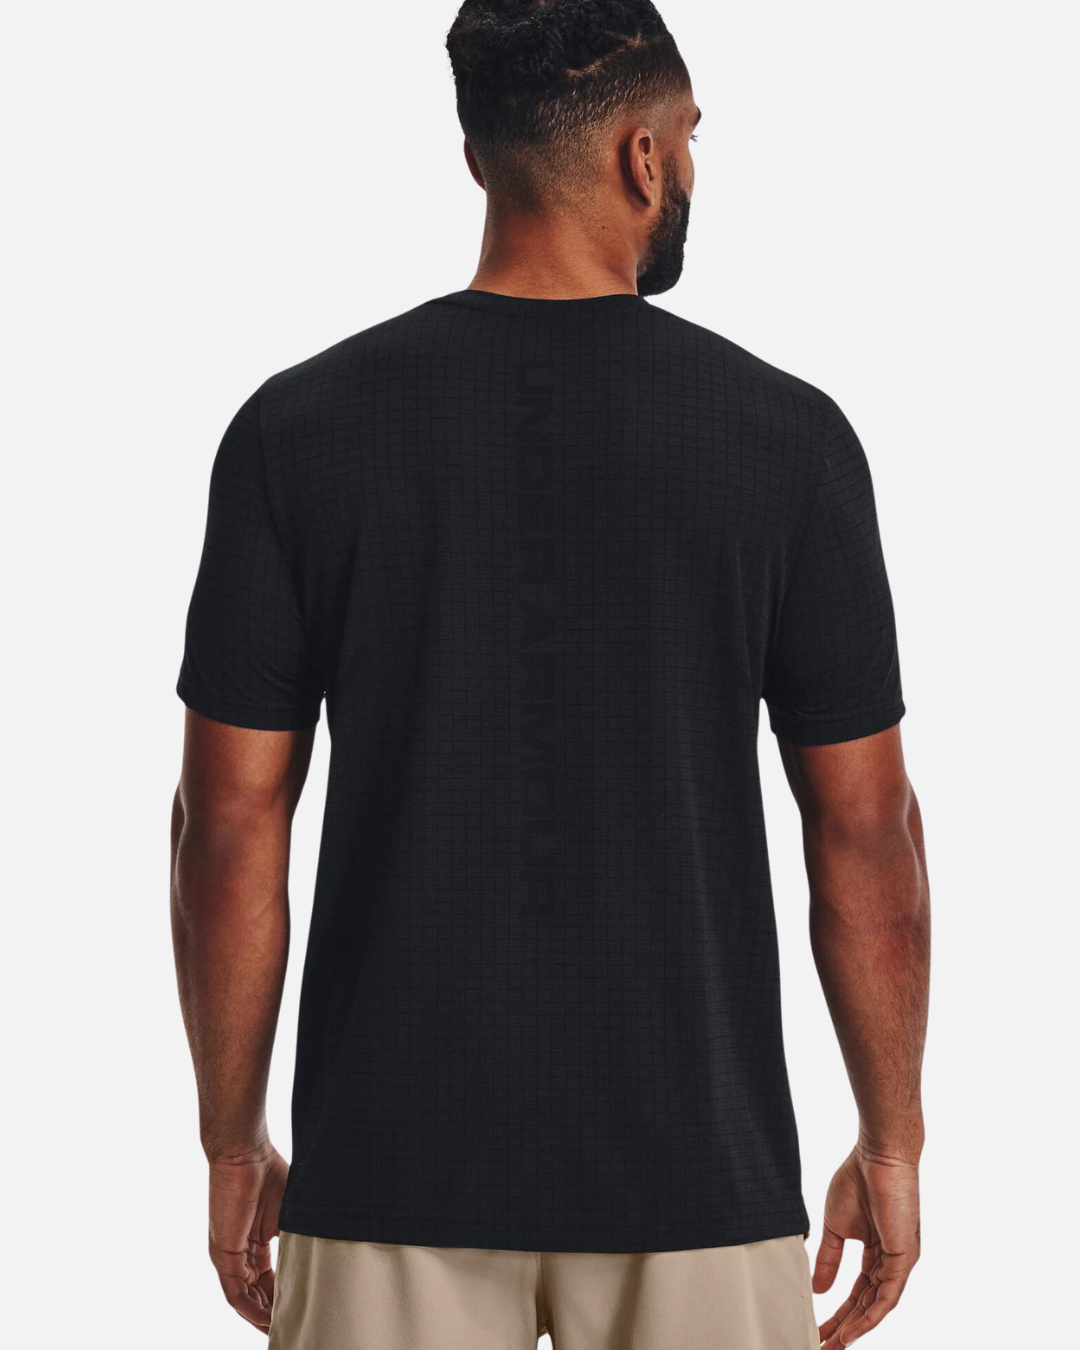 Under Armor Seamless Grid T-shirt - Black